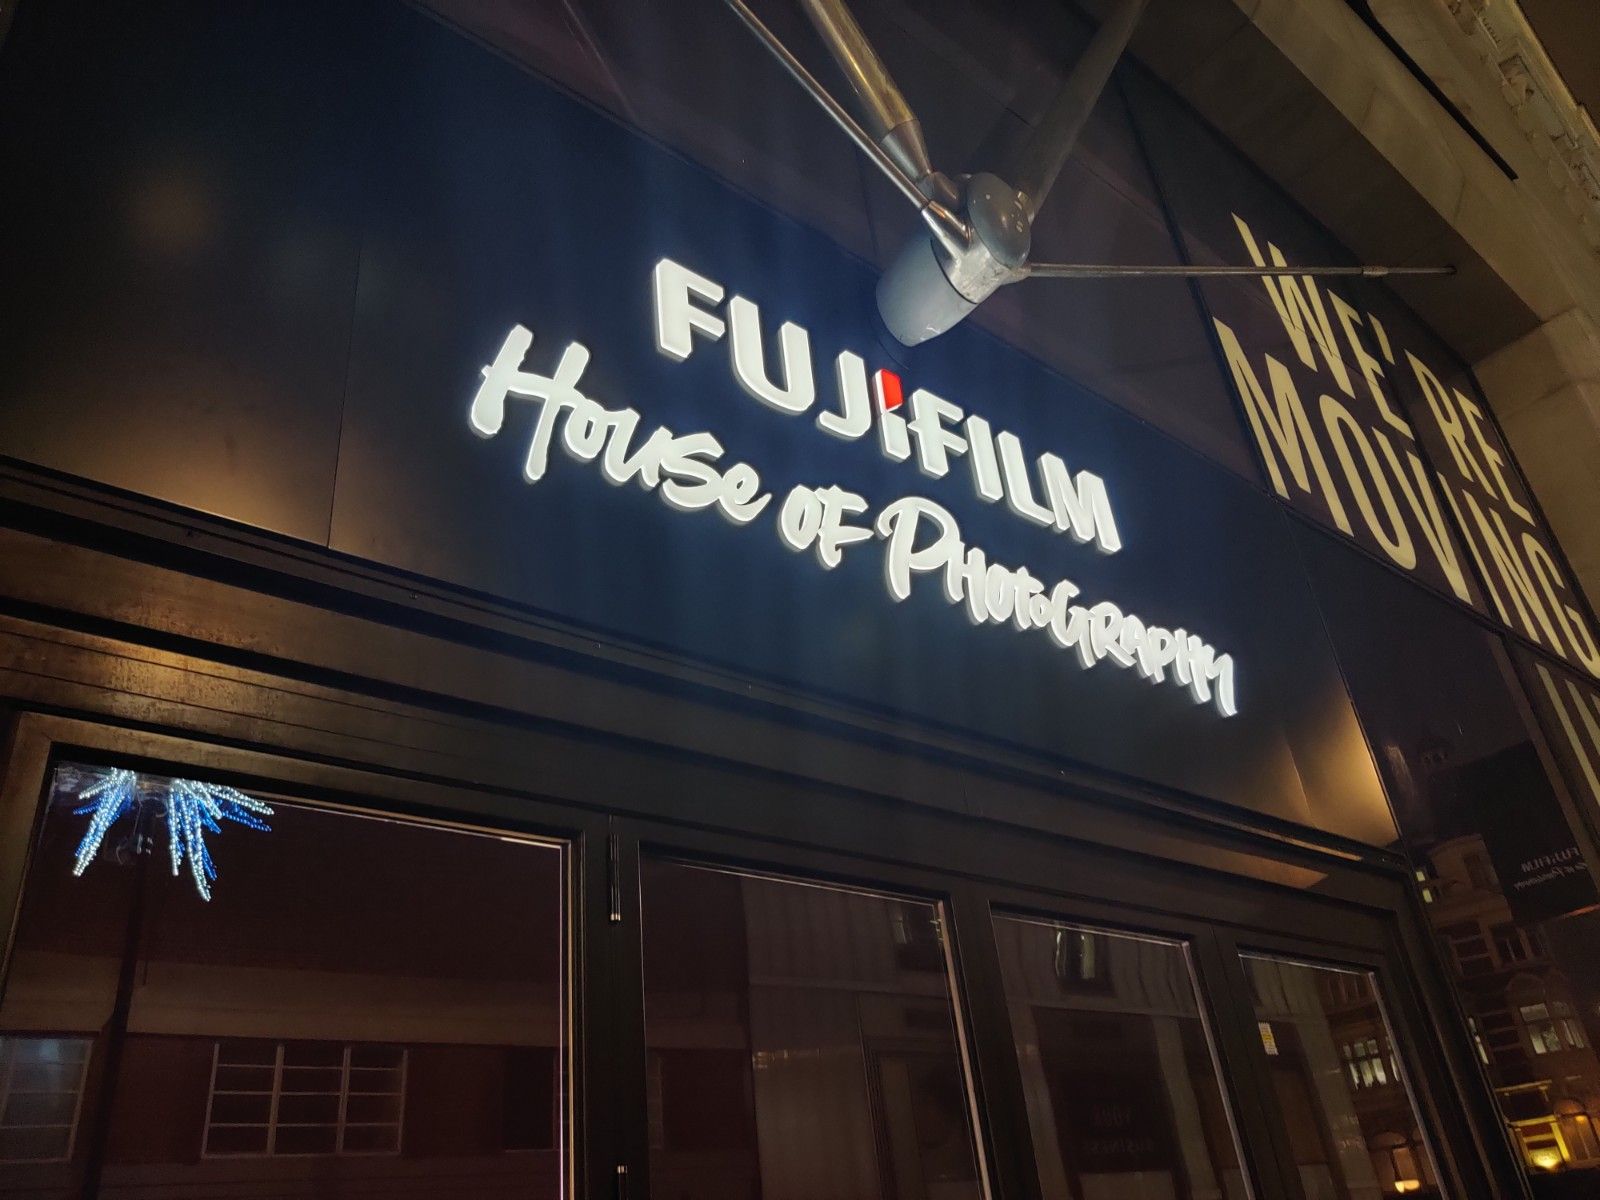 Fuji External Illuminated Shopfront